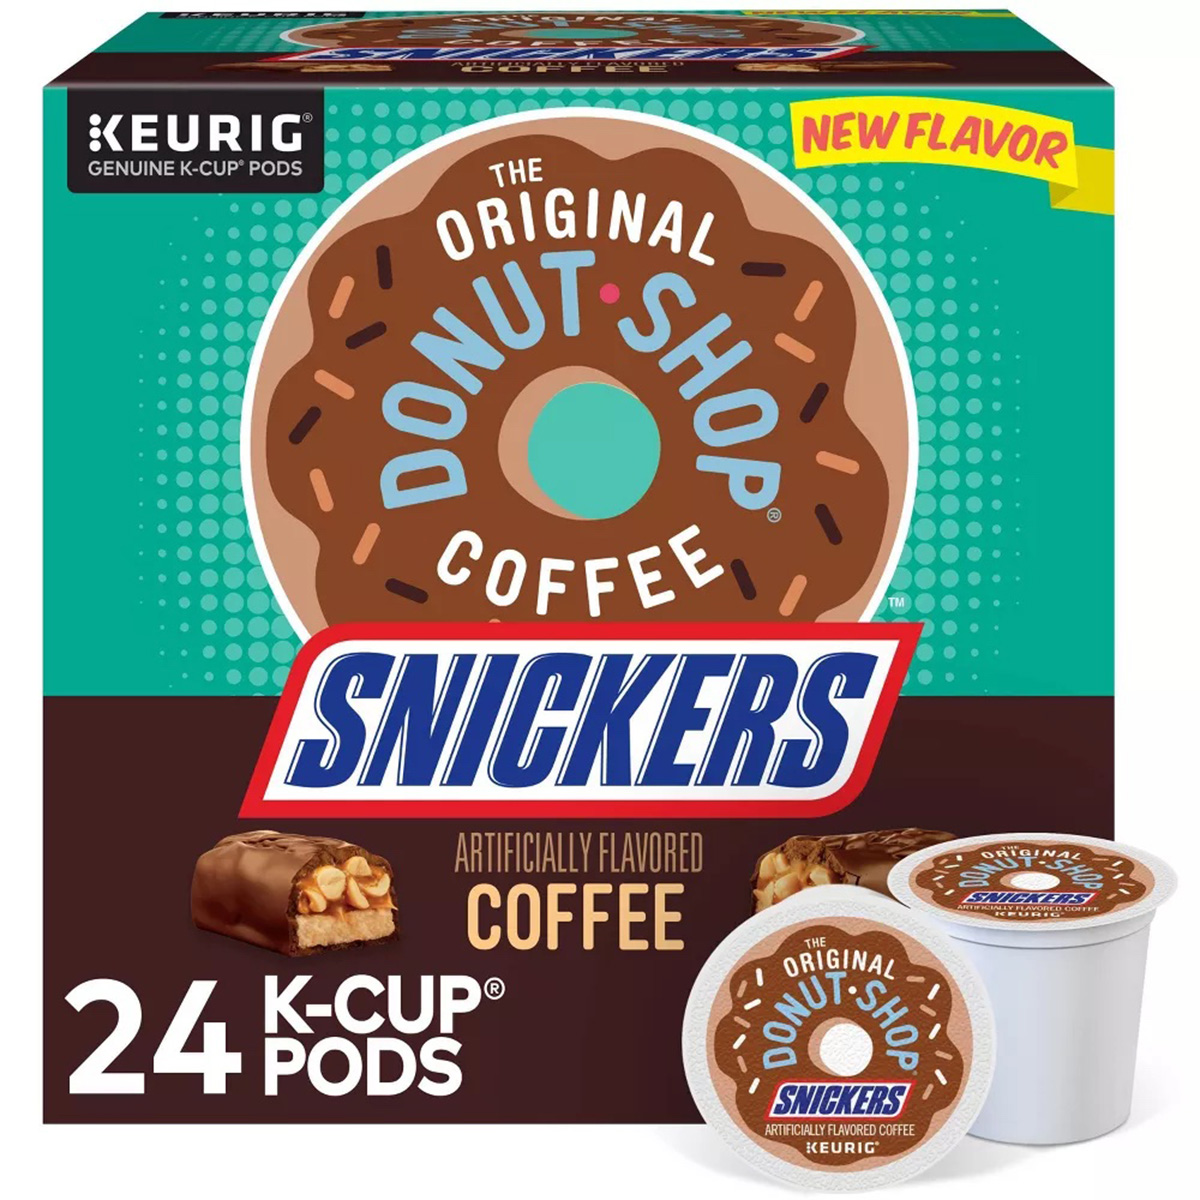 Keurig(R) The Original Donut Shop(R) Snickers K-Cup(R) - 24 Count